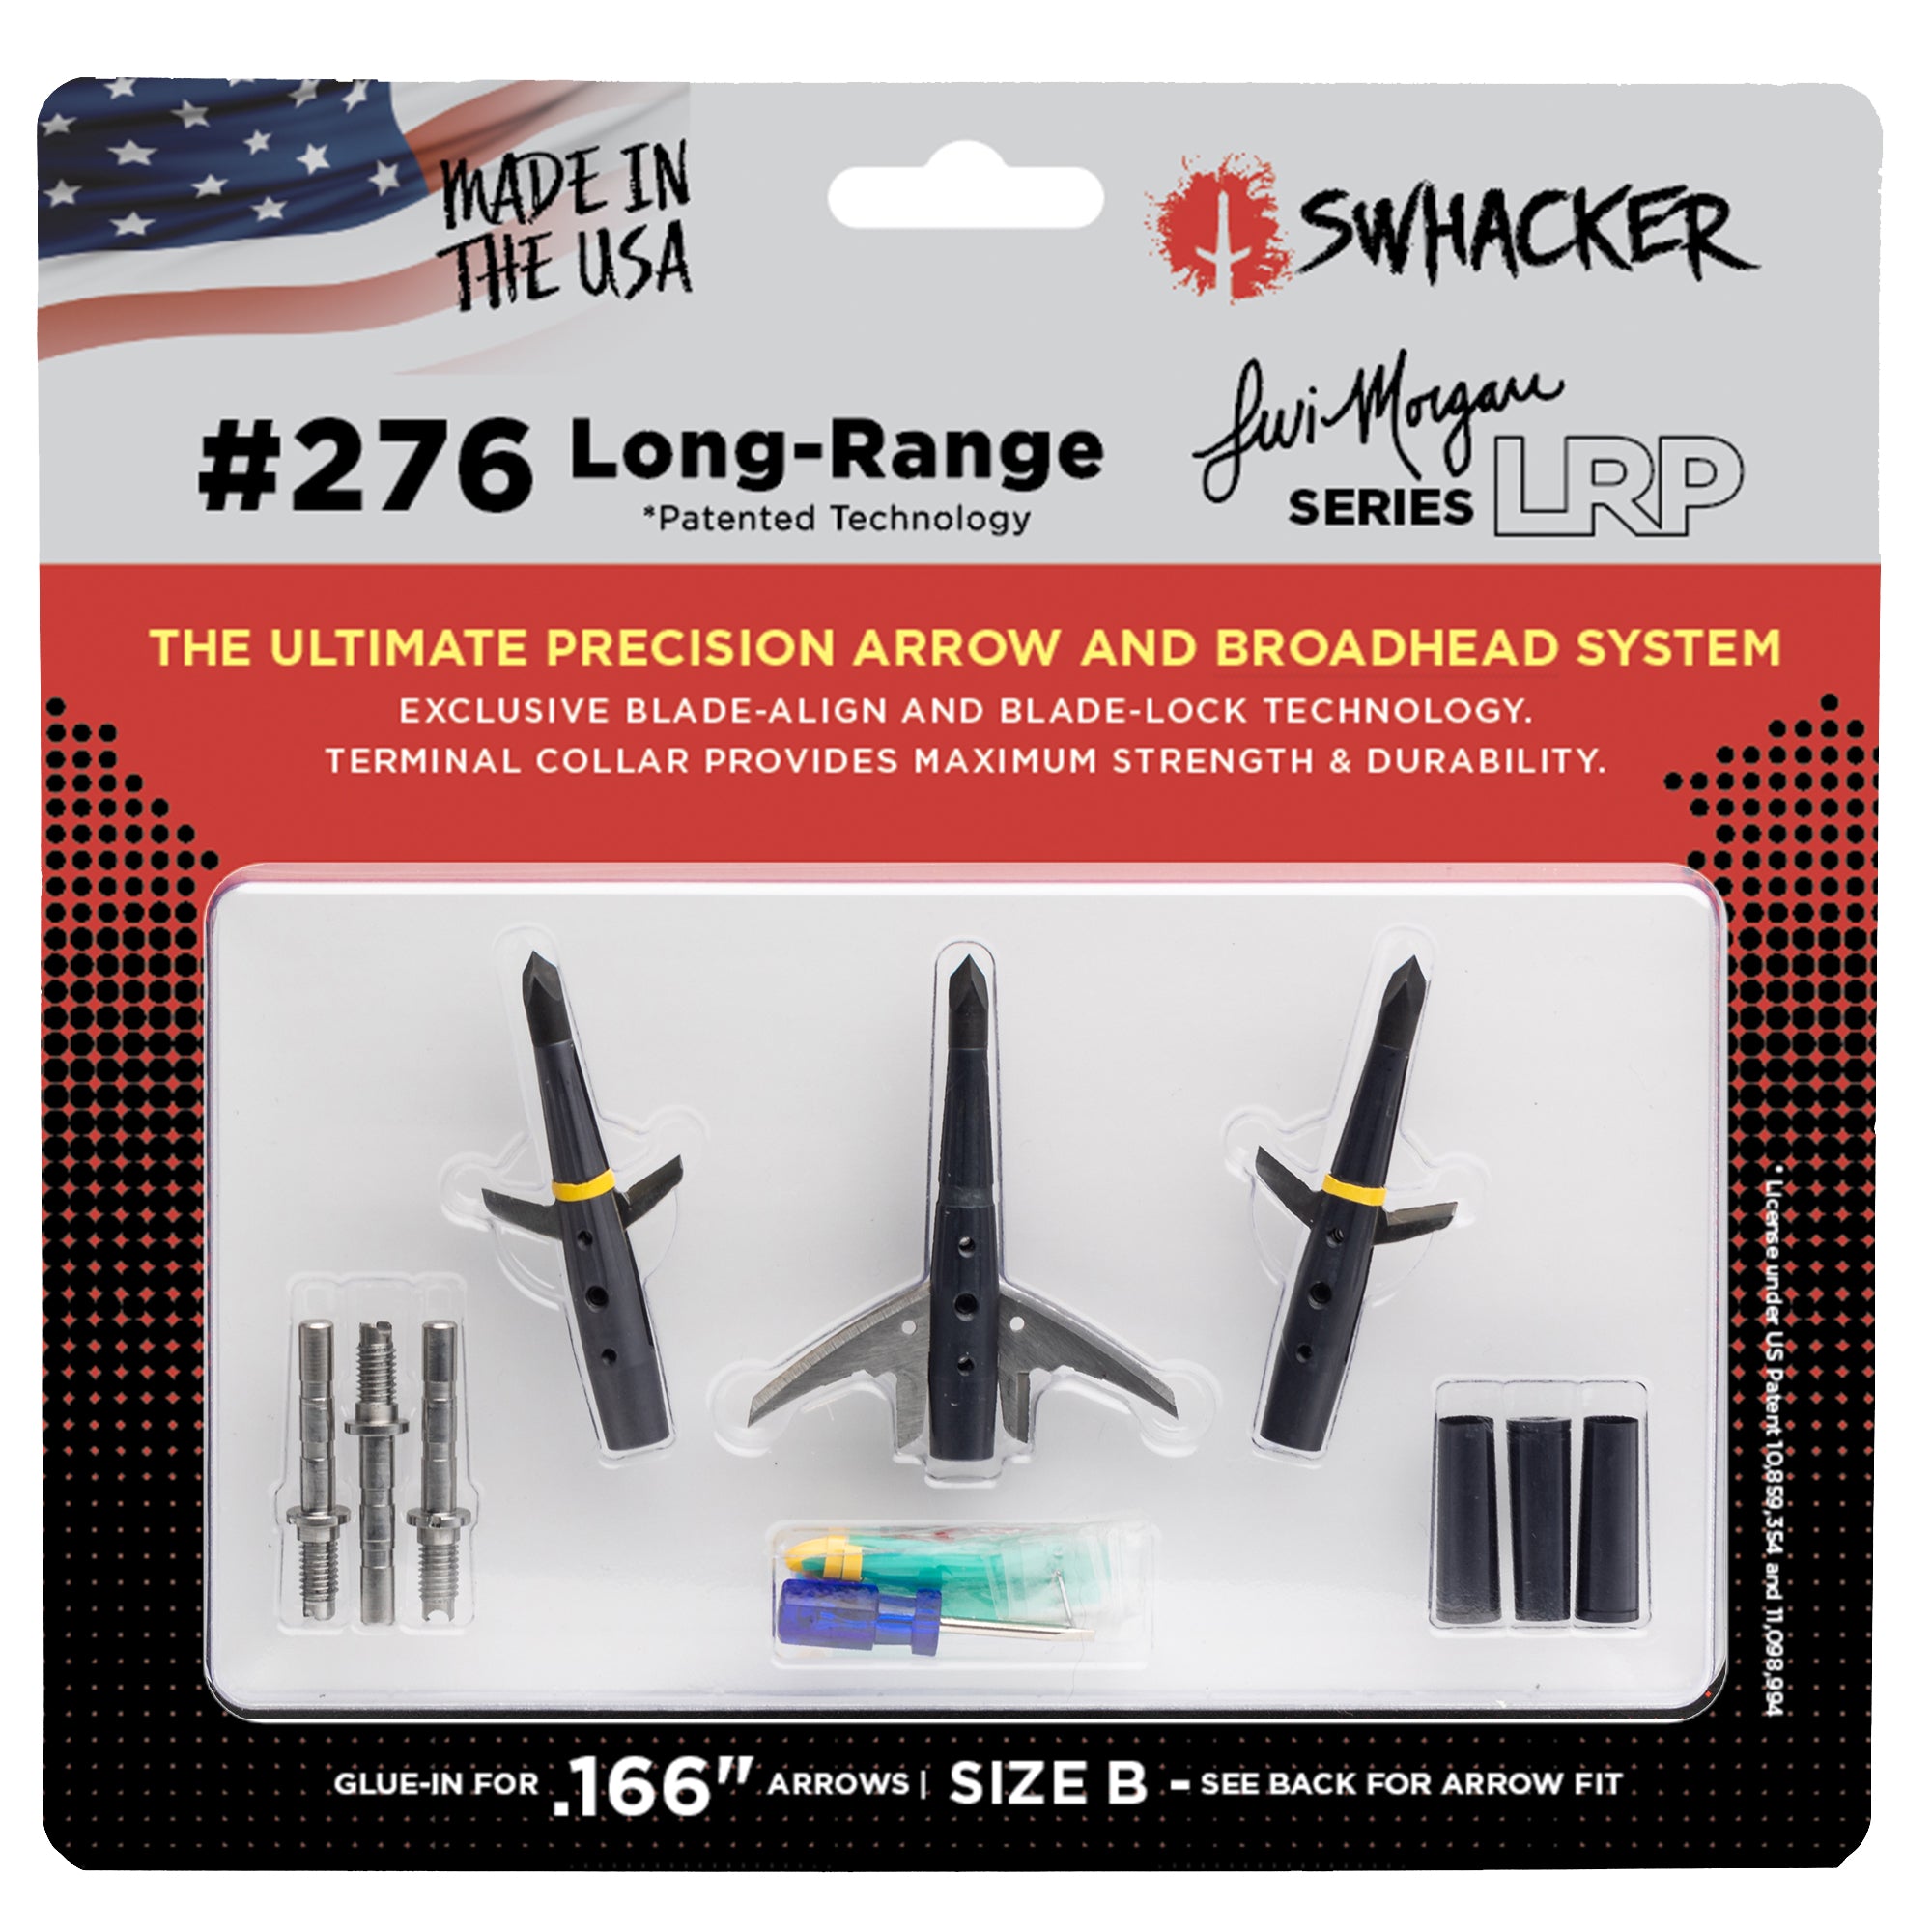 Swhacker LRP Broadhead #276 - Size B fits Arrow Shaft OD .238" to .241"